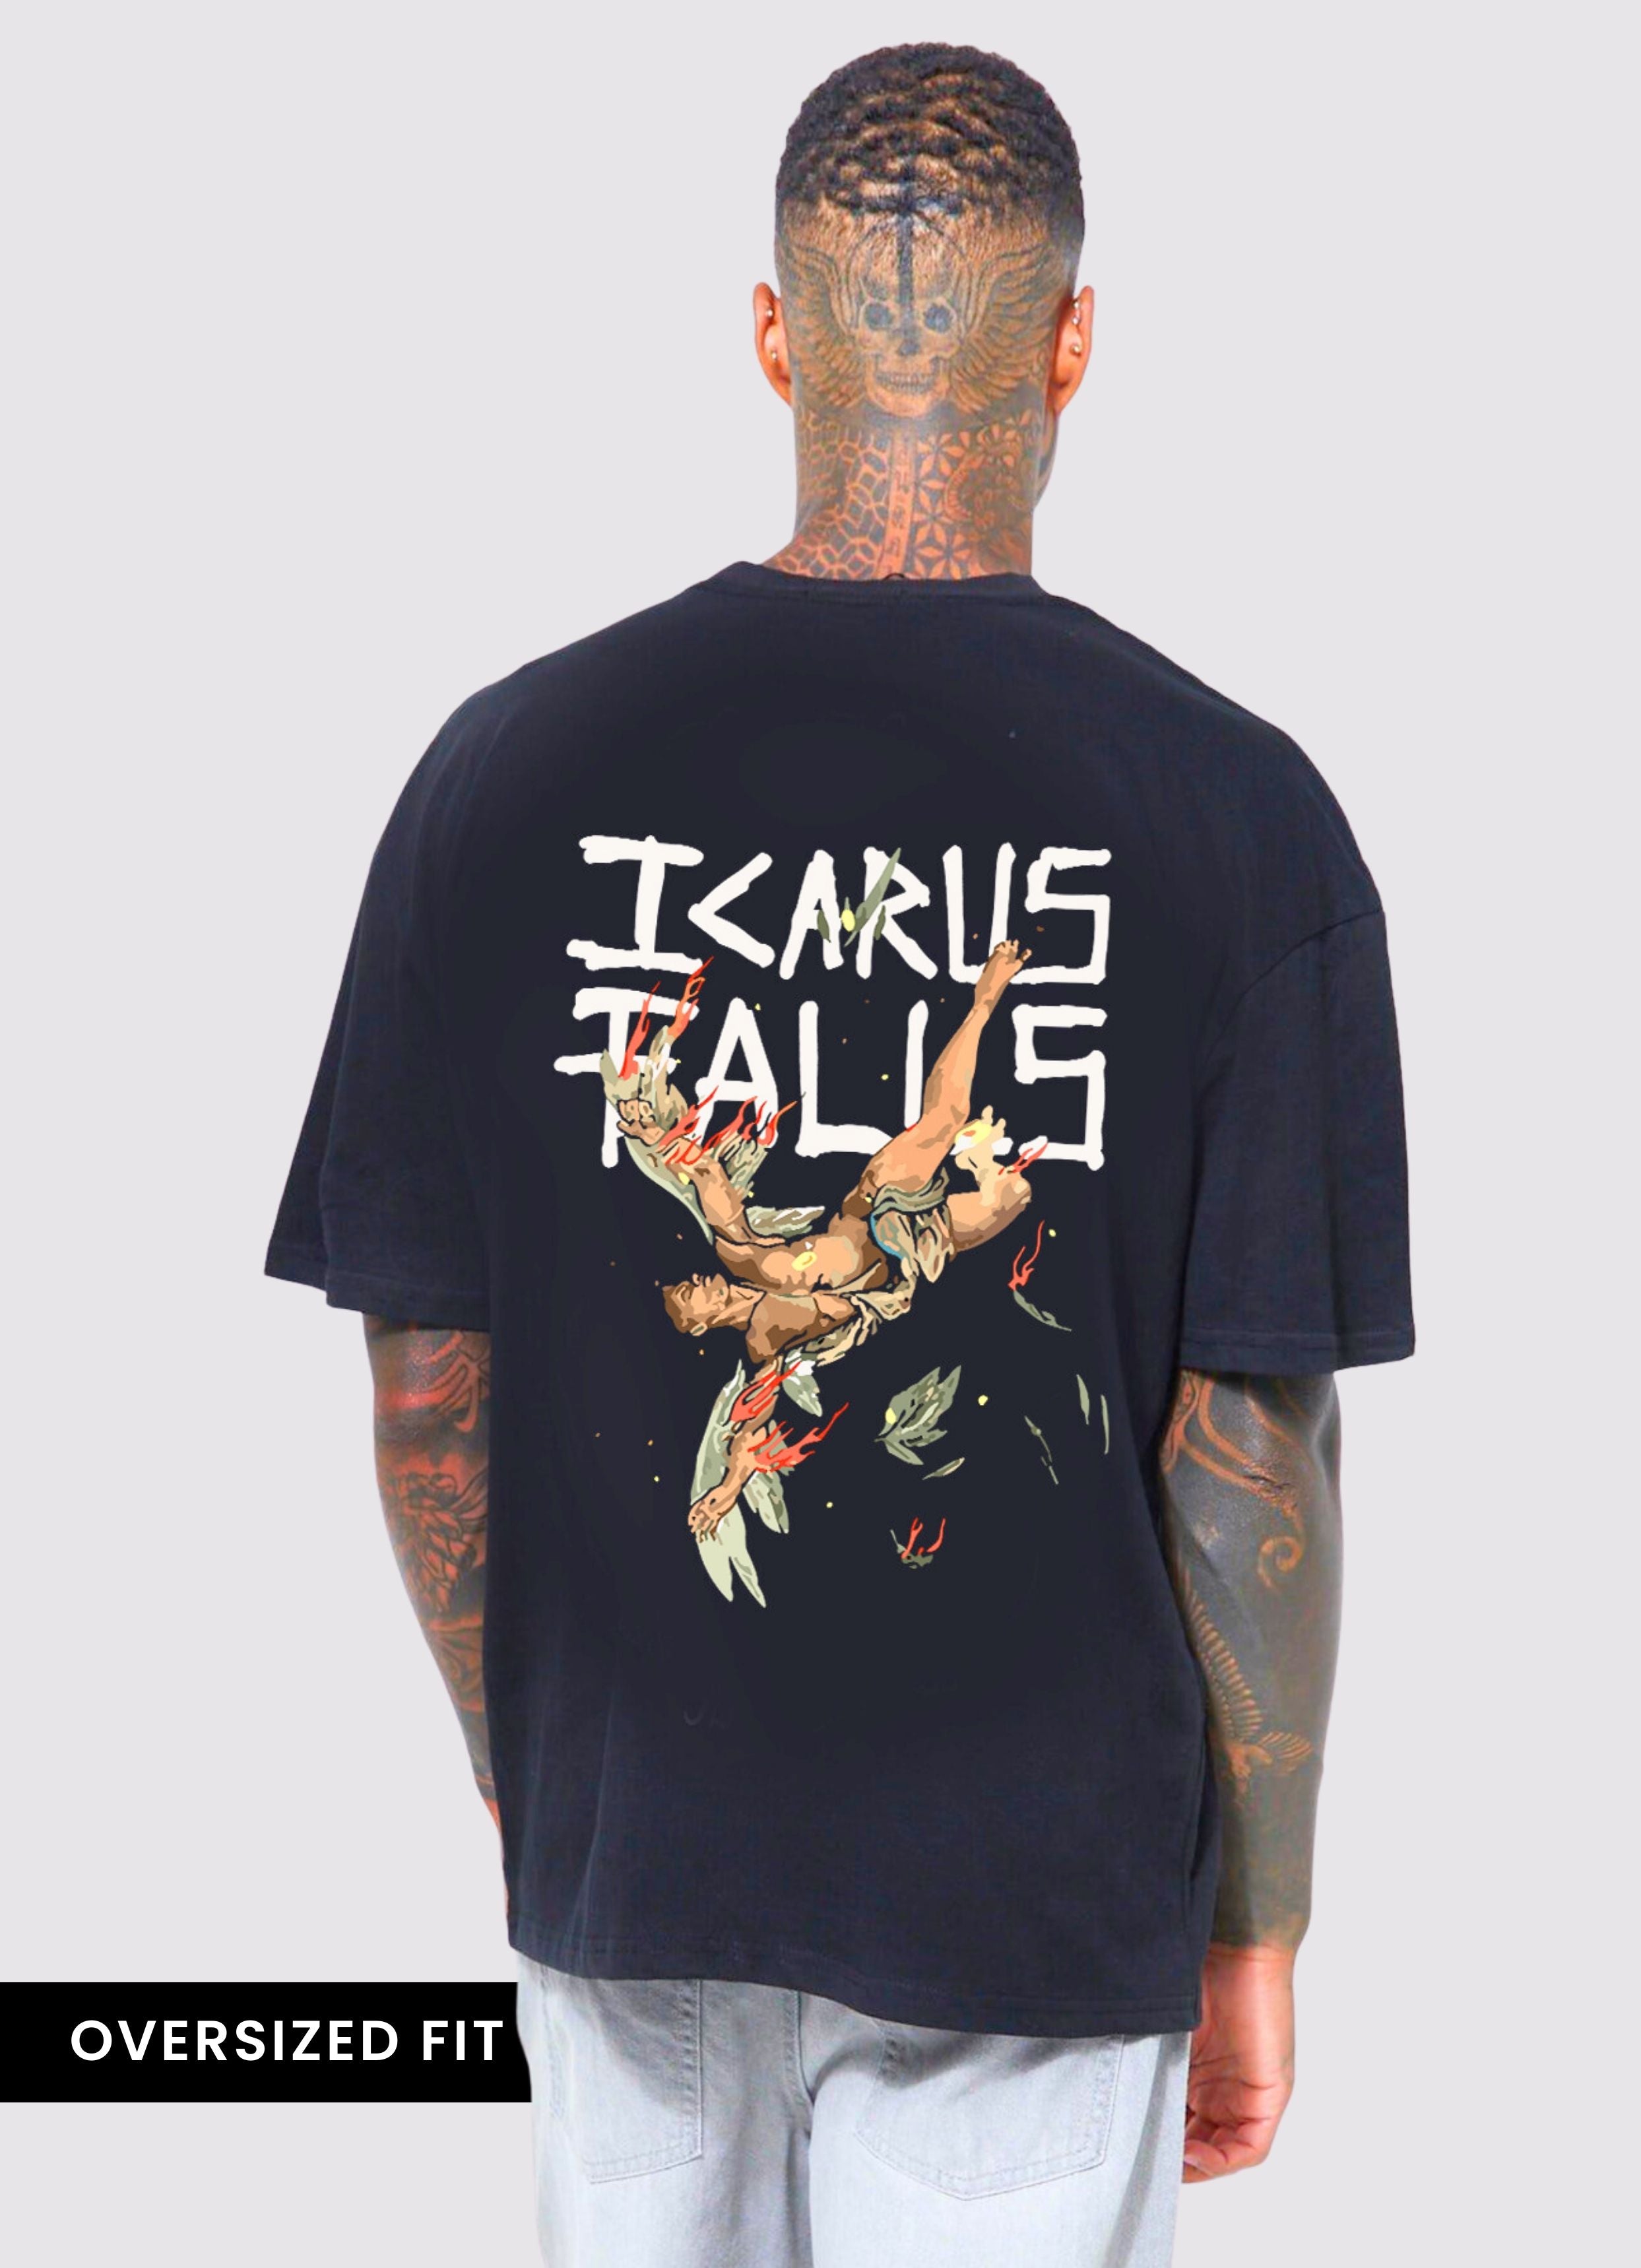 Zayn Icarus Falls F&B Oversized Unisex Tshirt